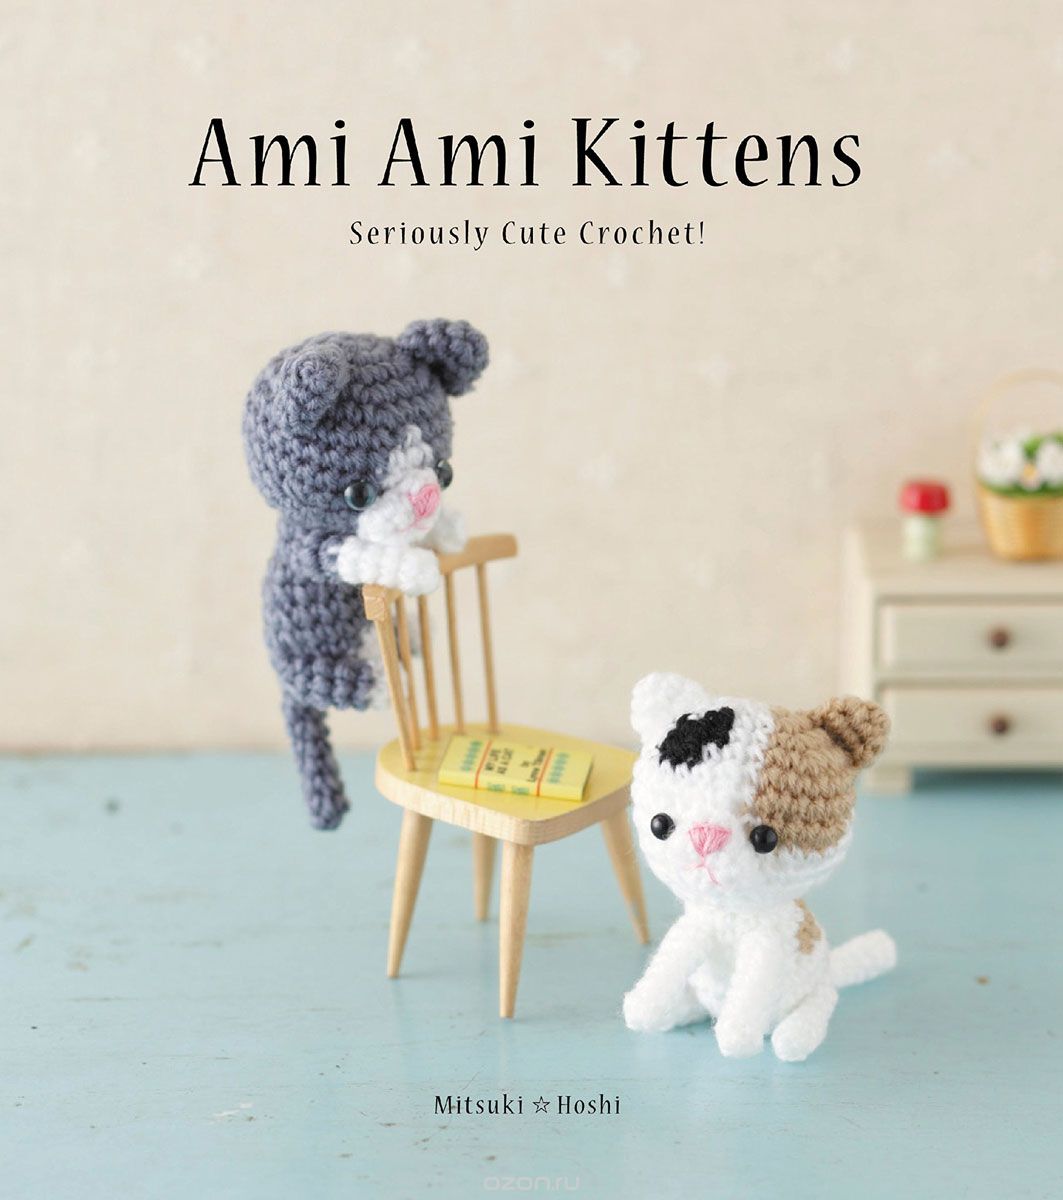 Скачать книгу "Ami Ami Kittens: Seriously Cute Crochet!"